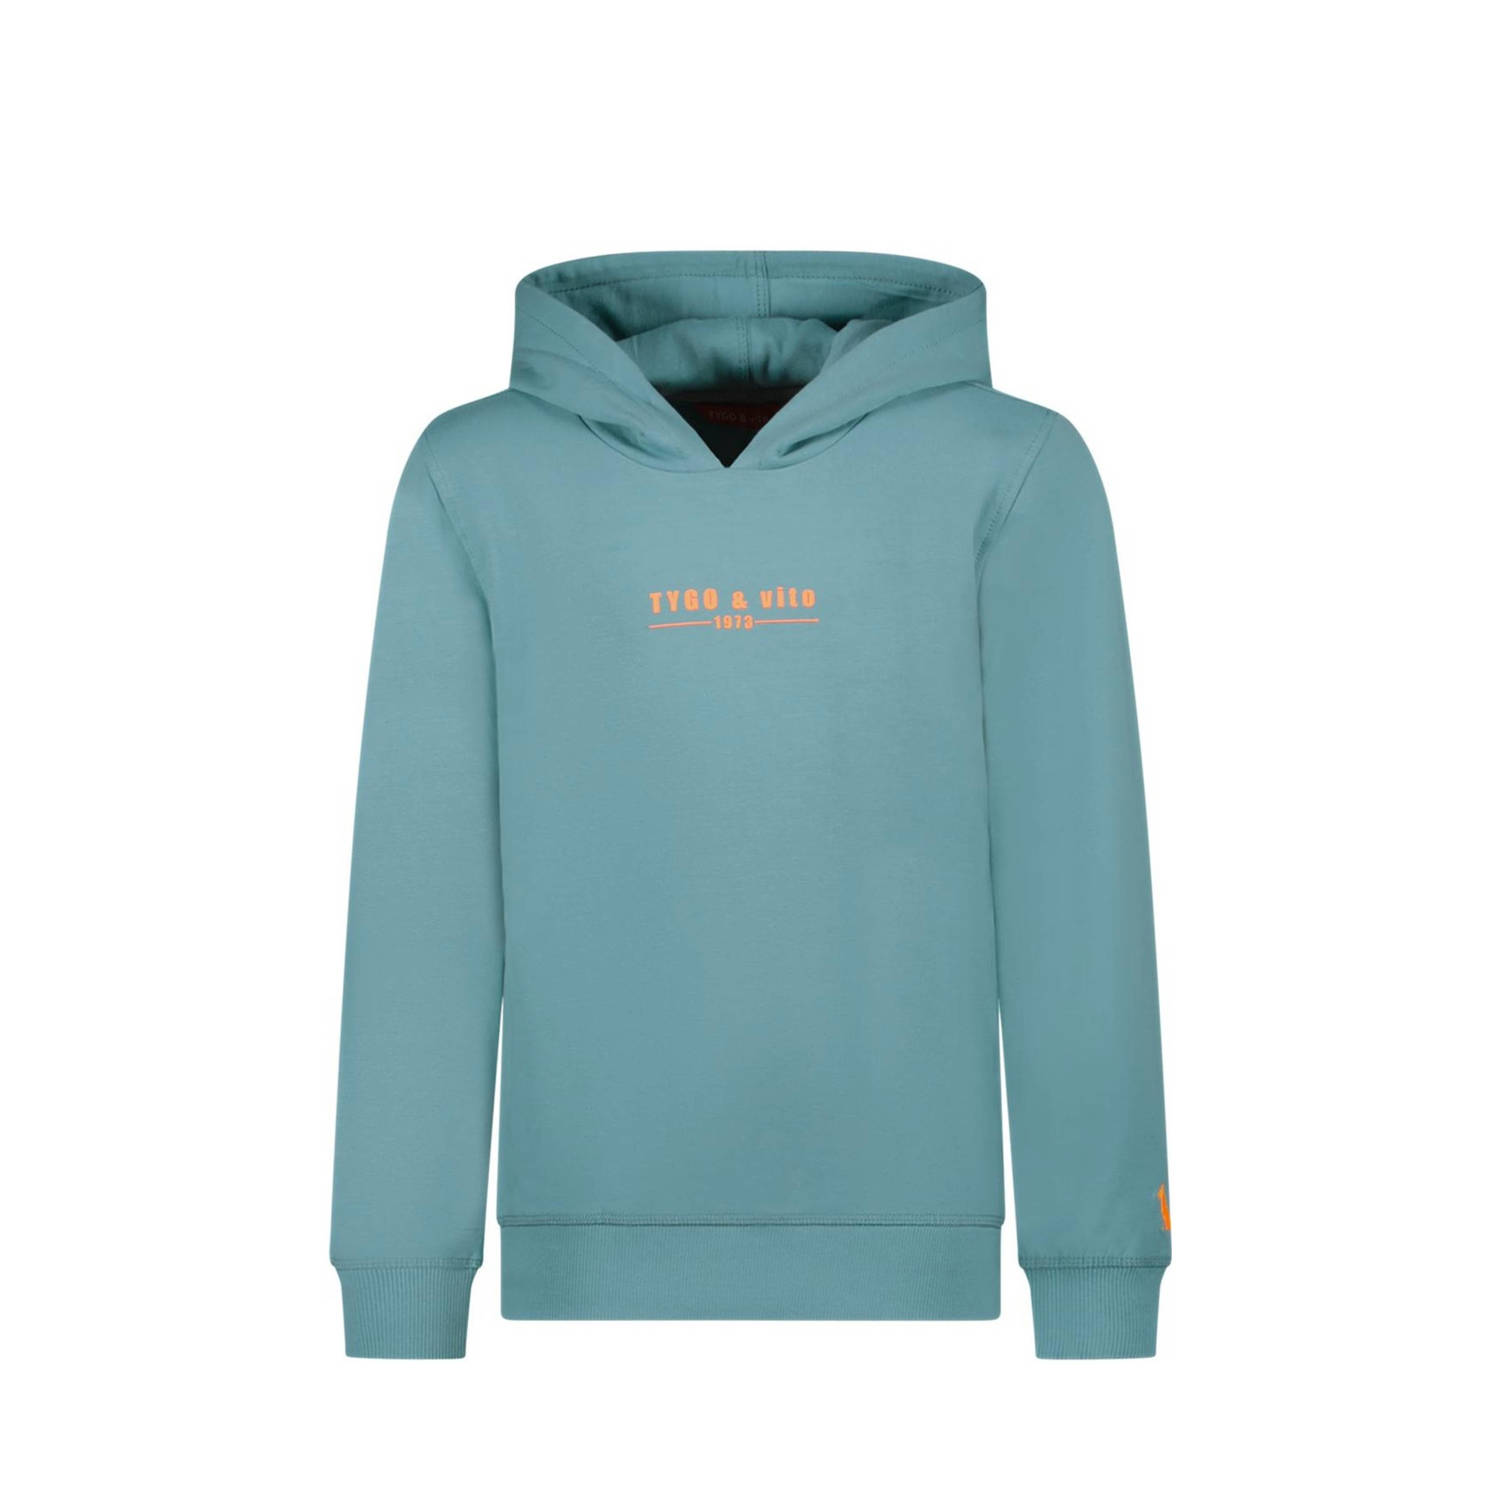 TYGO & vito hoodie Hugo met logo aqua blauw Sweater Logo 110 116